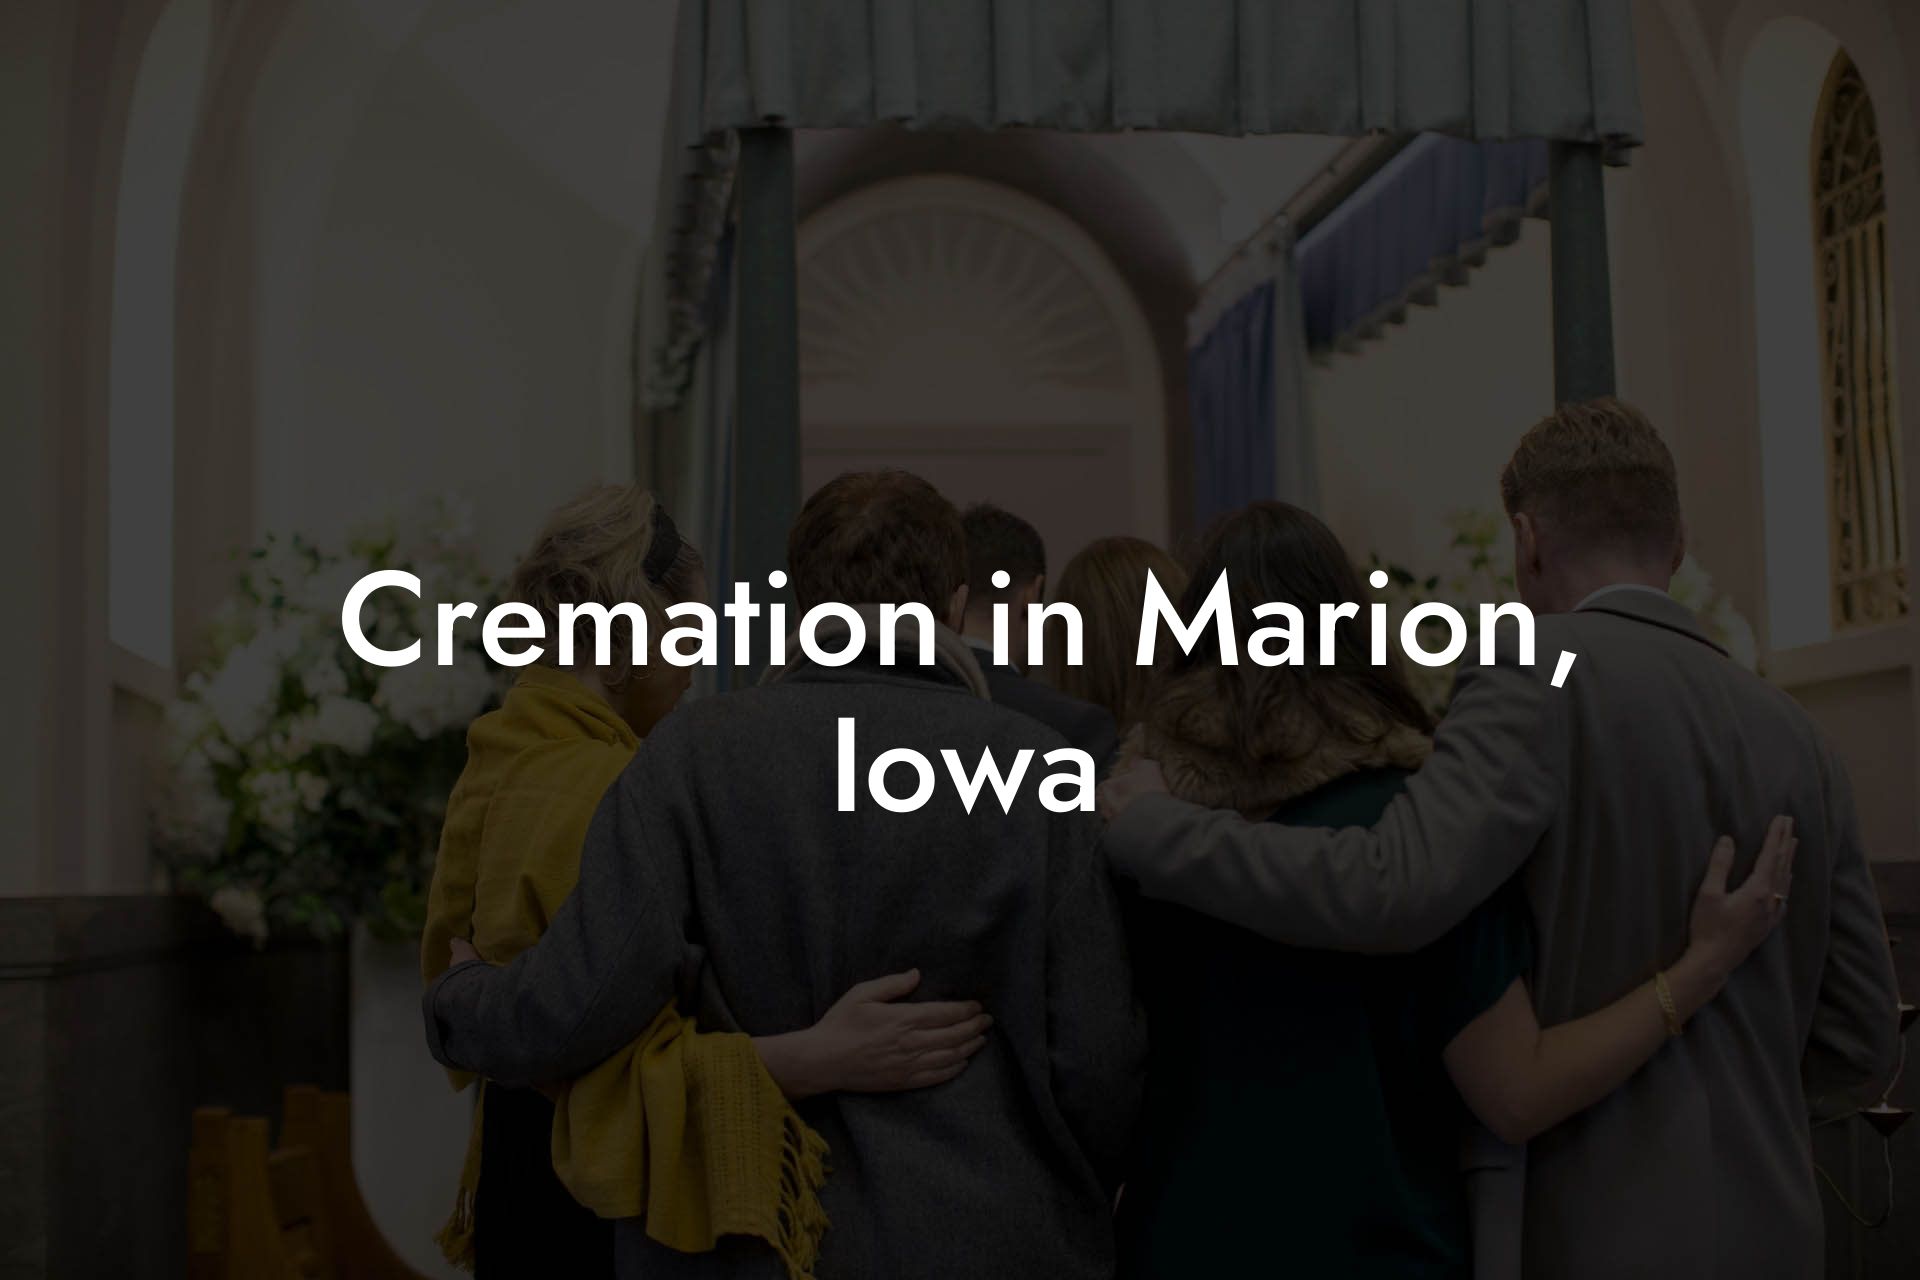 Cremation in Marion, Iowa